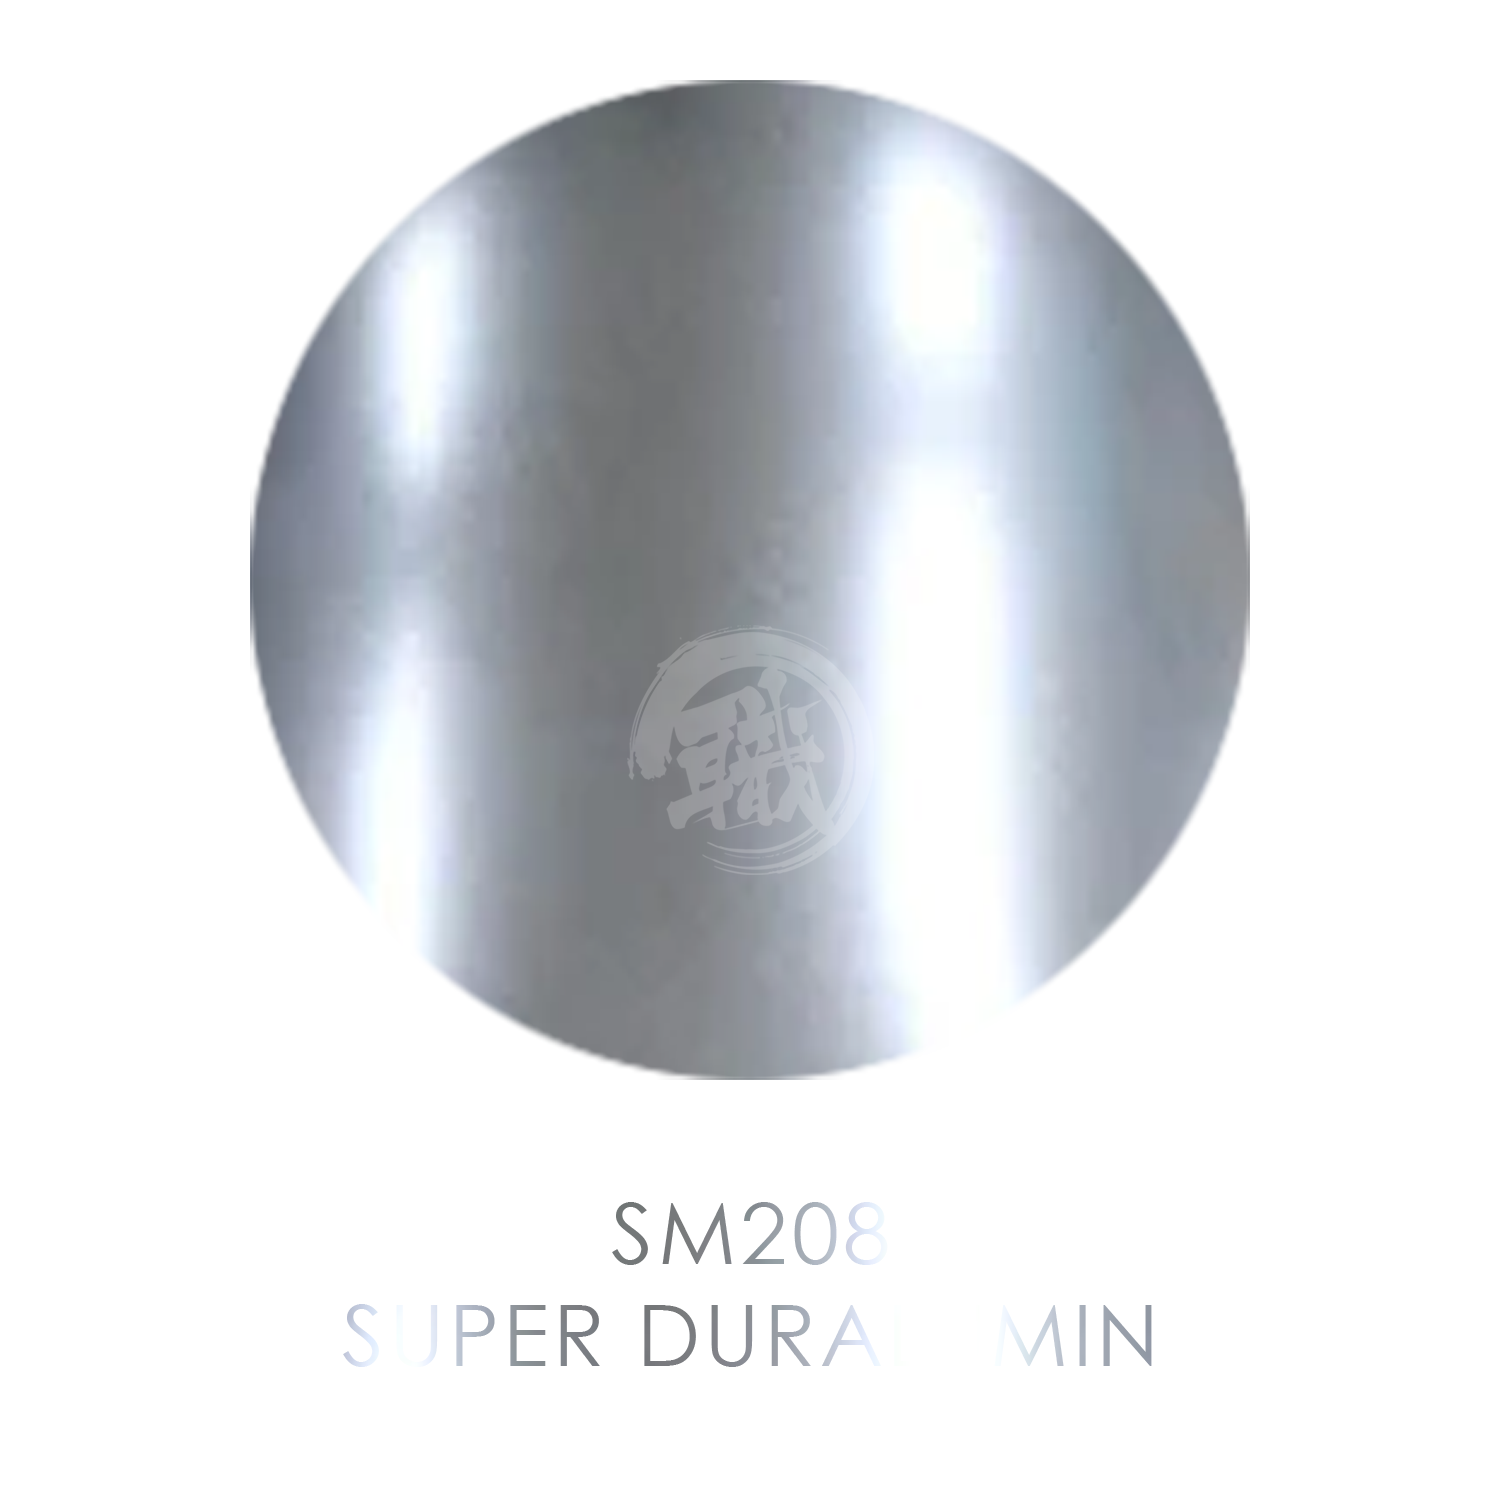 GSI Creos - [SM208] Super Duralumin - ShokuninGunpla